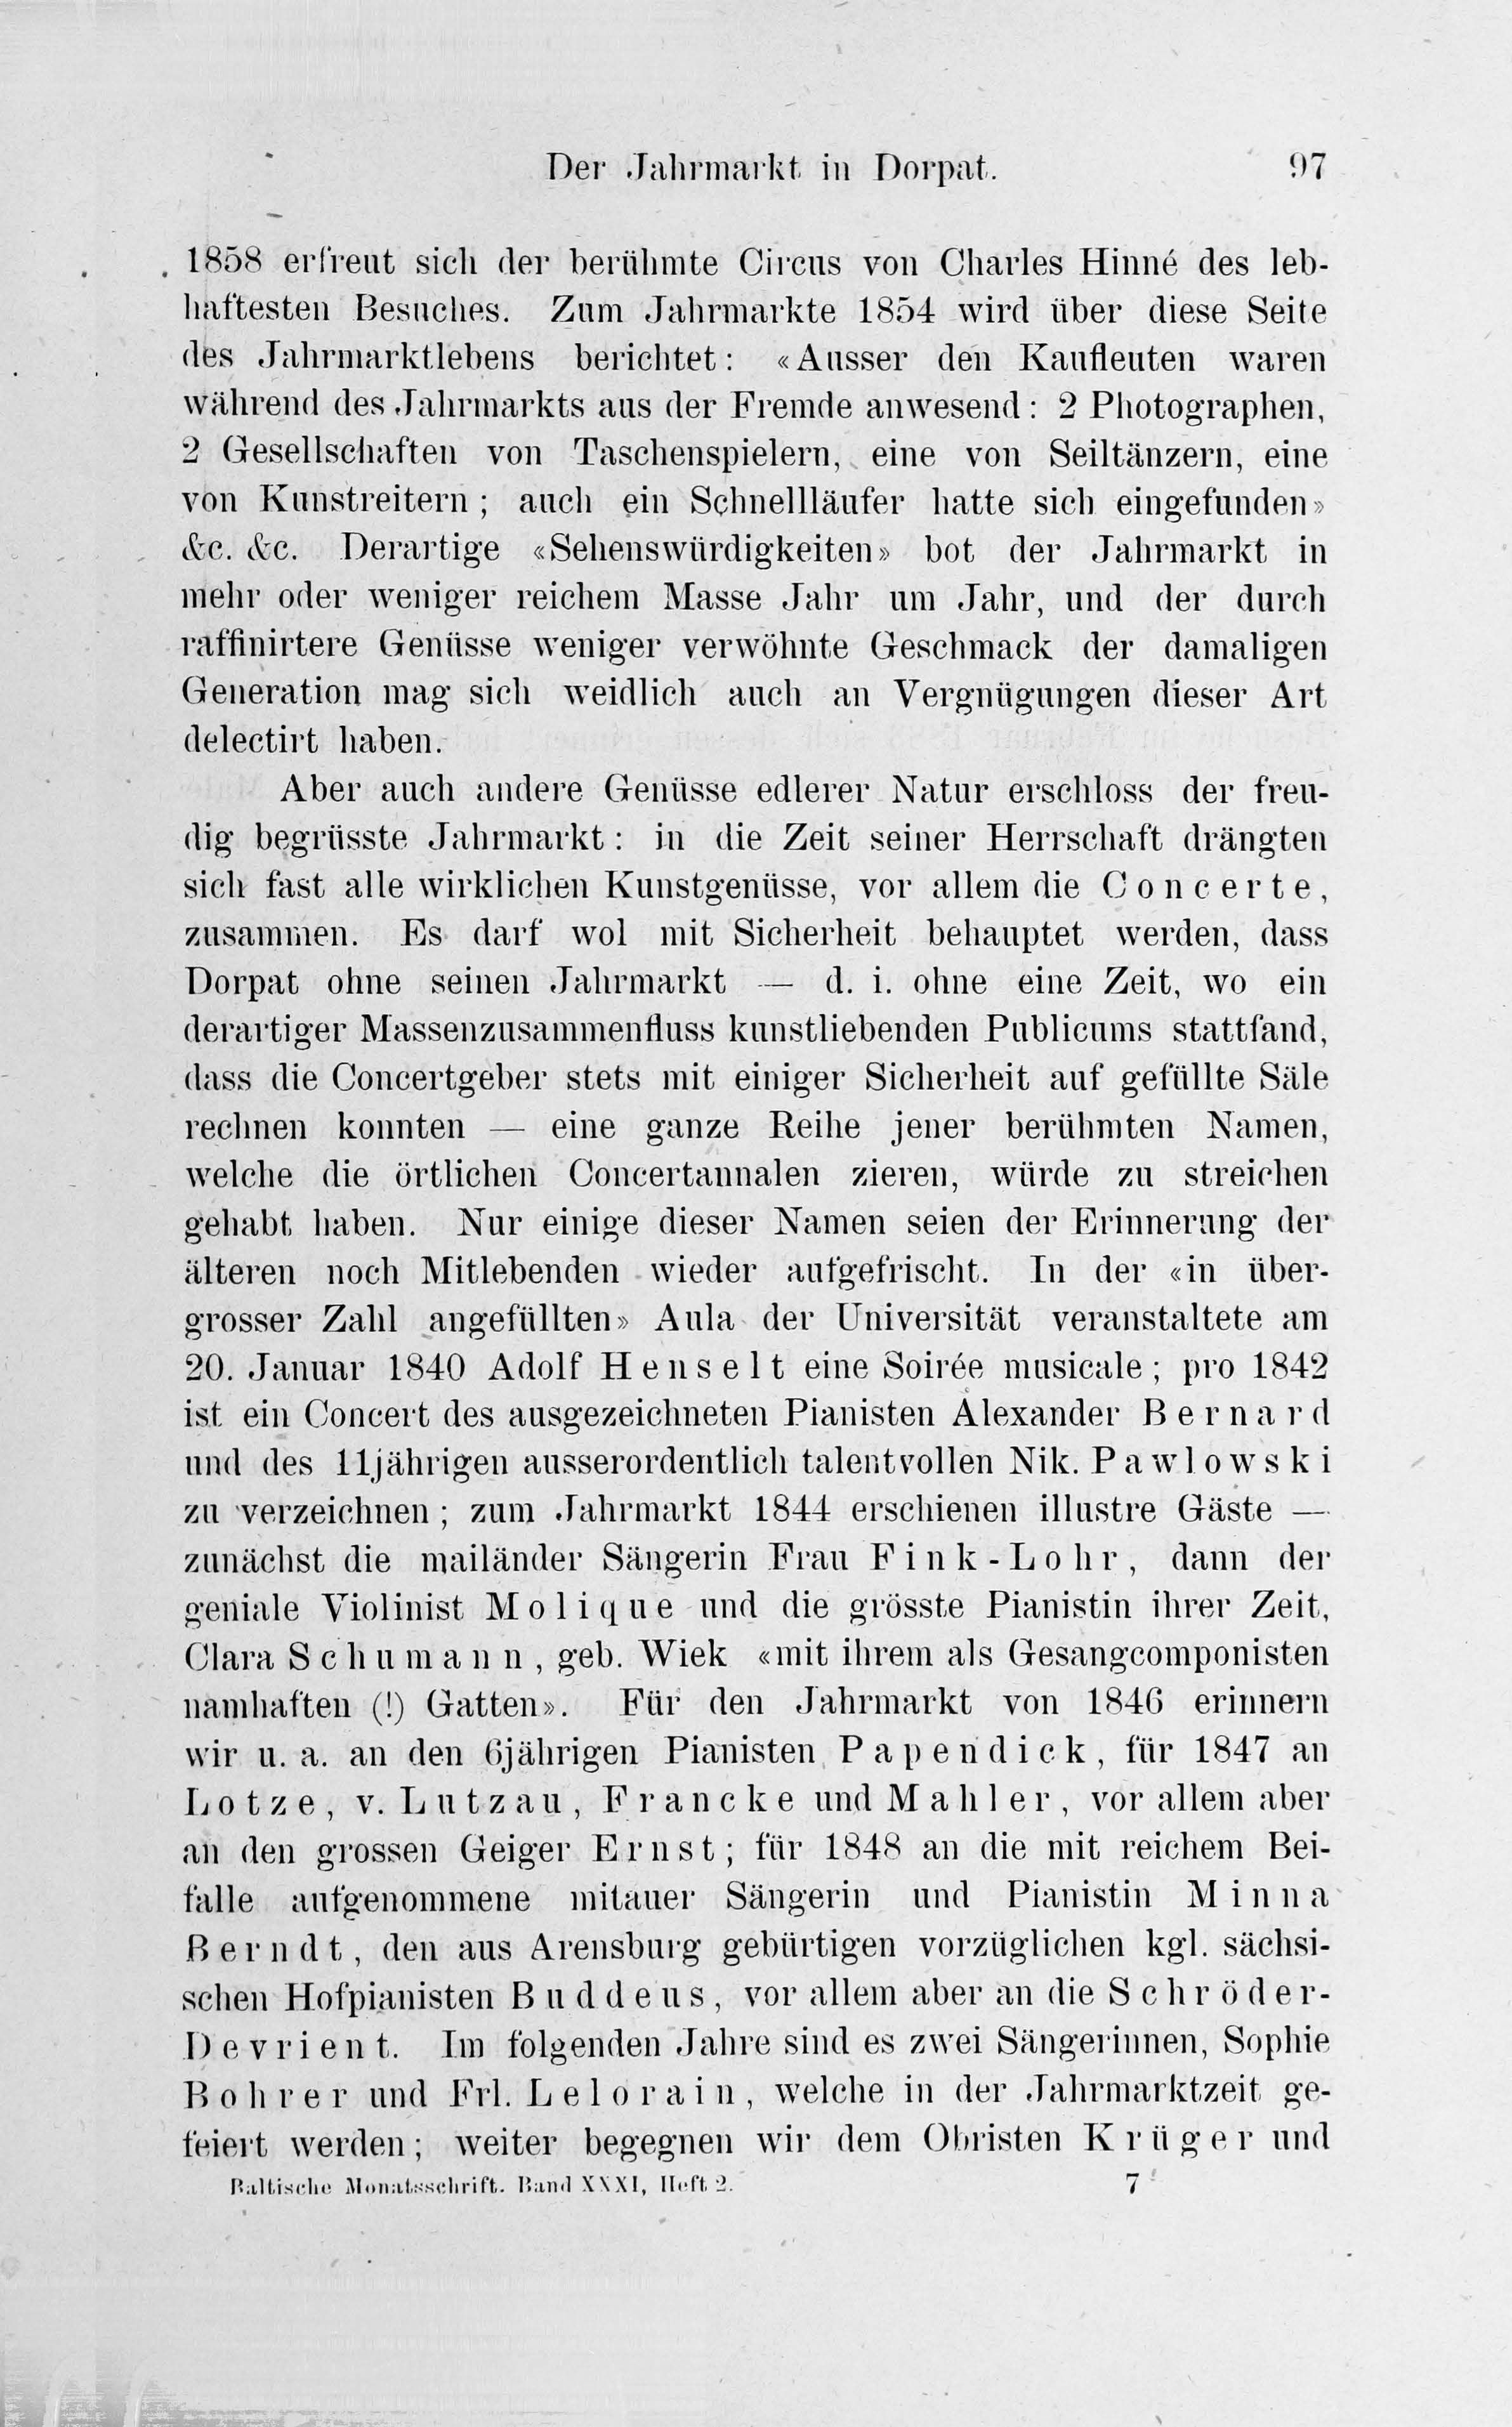 Der Jahrmarkt in Dorpat (1884) | 37. Основной текст